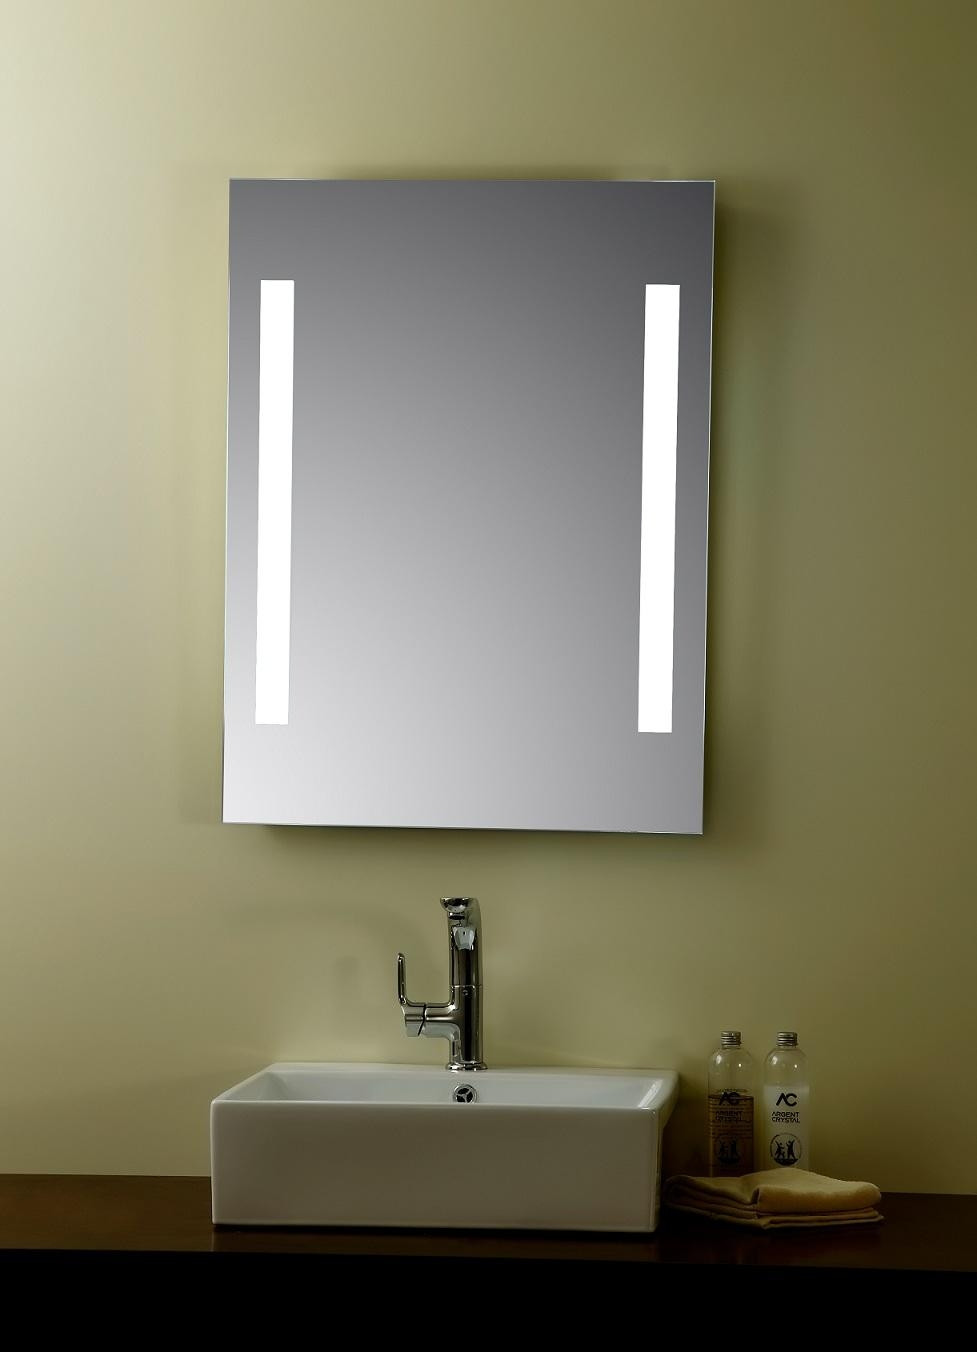 Bathroom Magnifying Mirror
 20 Best Ideas Magnifying Vanity Mirrors for Bathroom